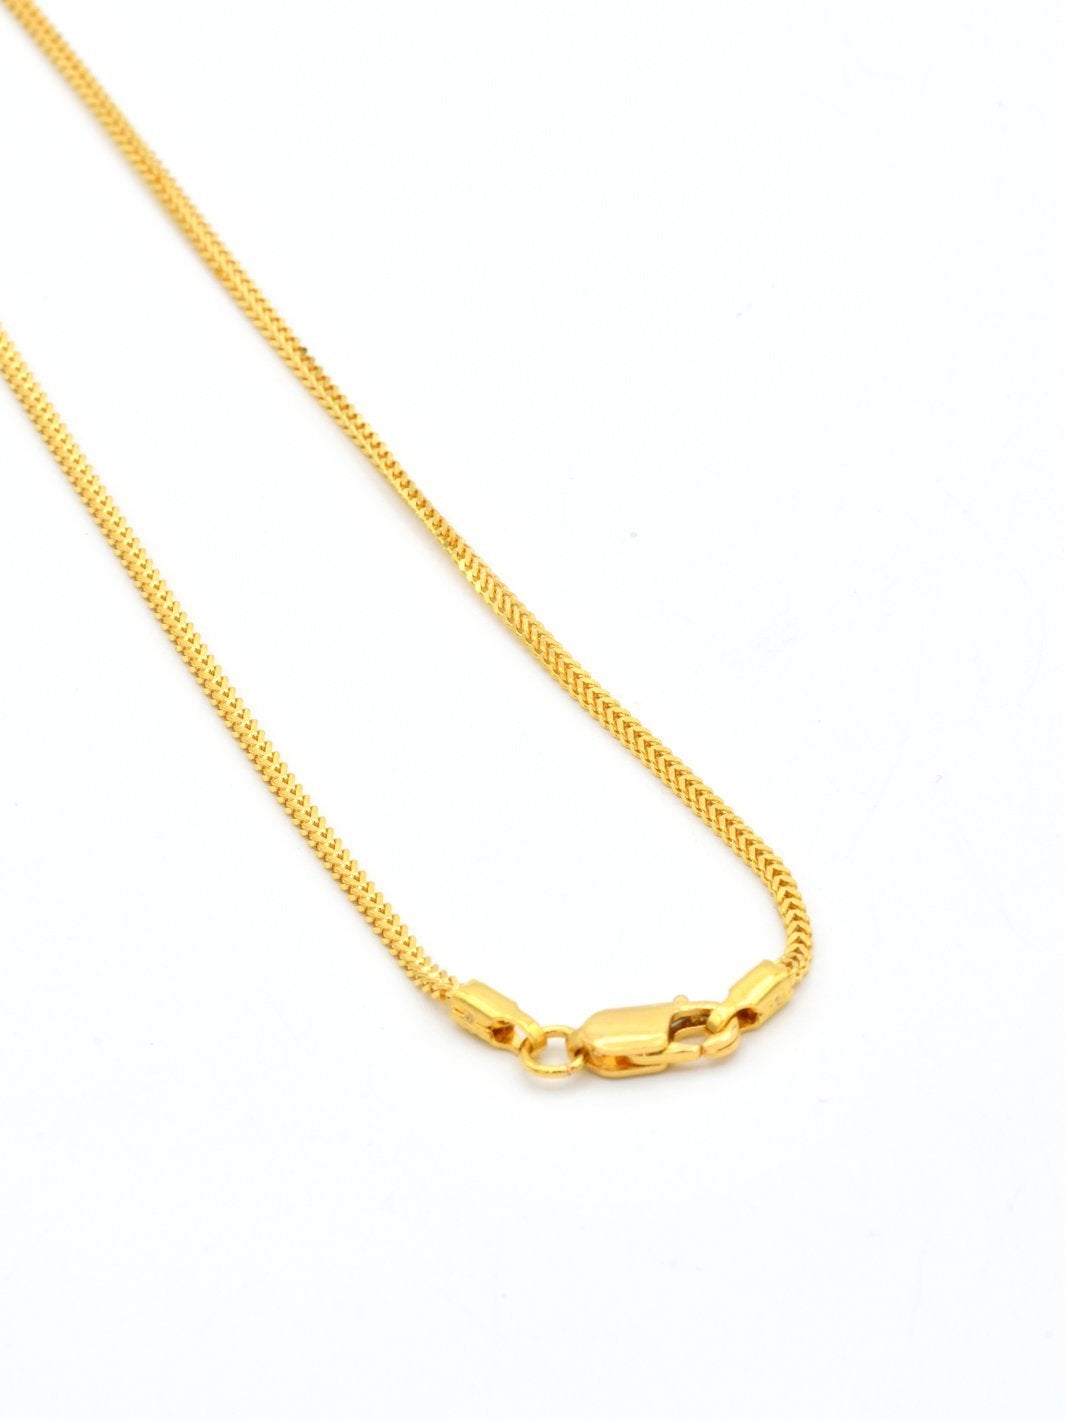 22ct Gold Fox Tail Chain - 55 cm - Roop Darshan